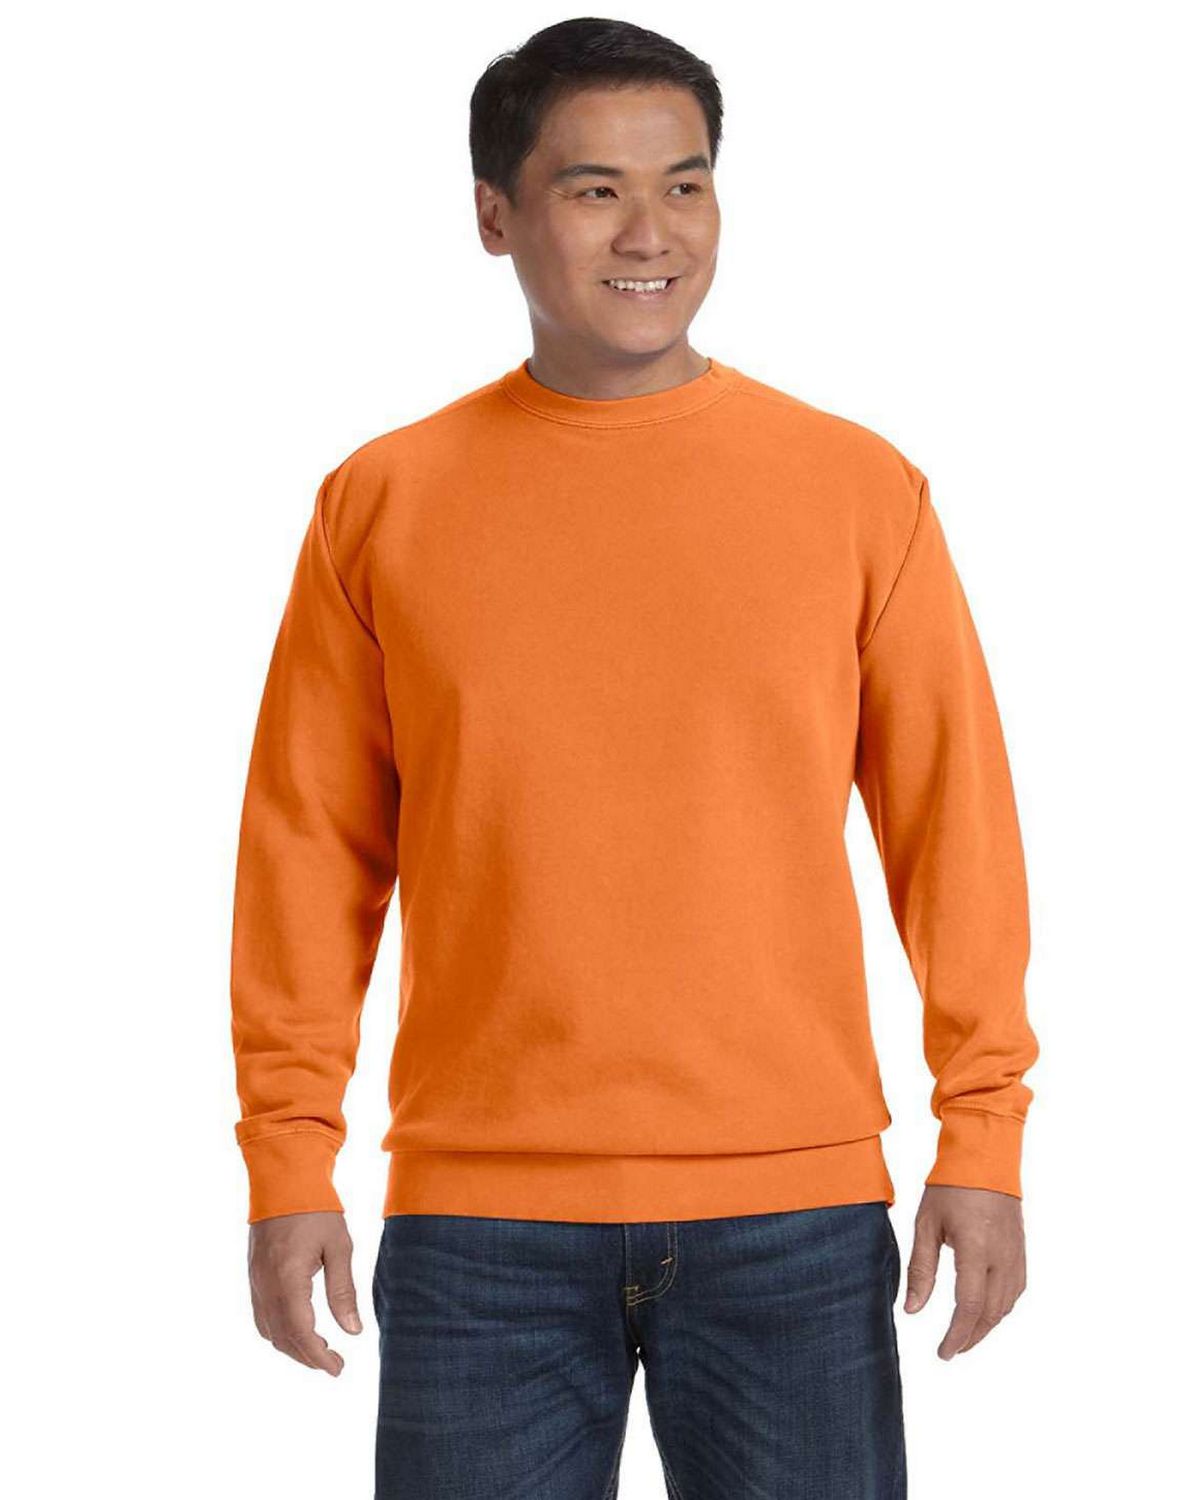 Garment-Dyed Fleece Crew 1566 Size S-3XL Comfort Colors Mens 9.5 oz 